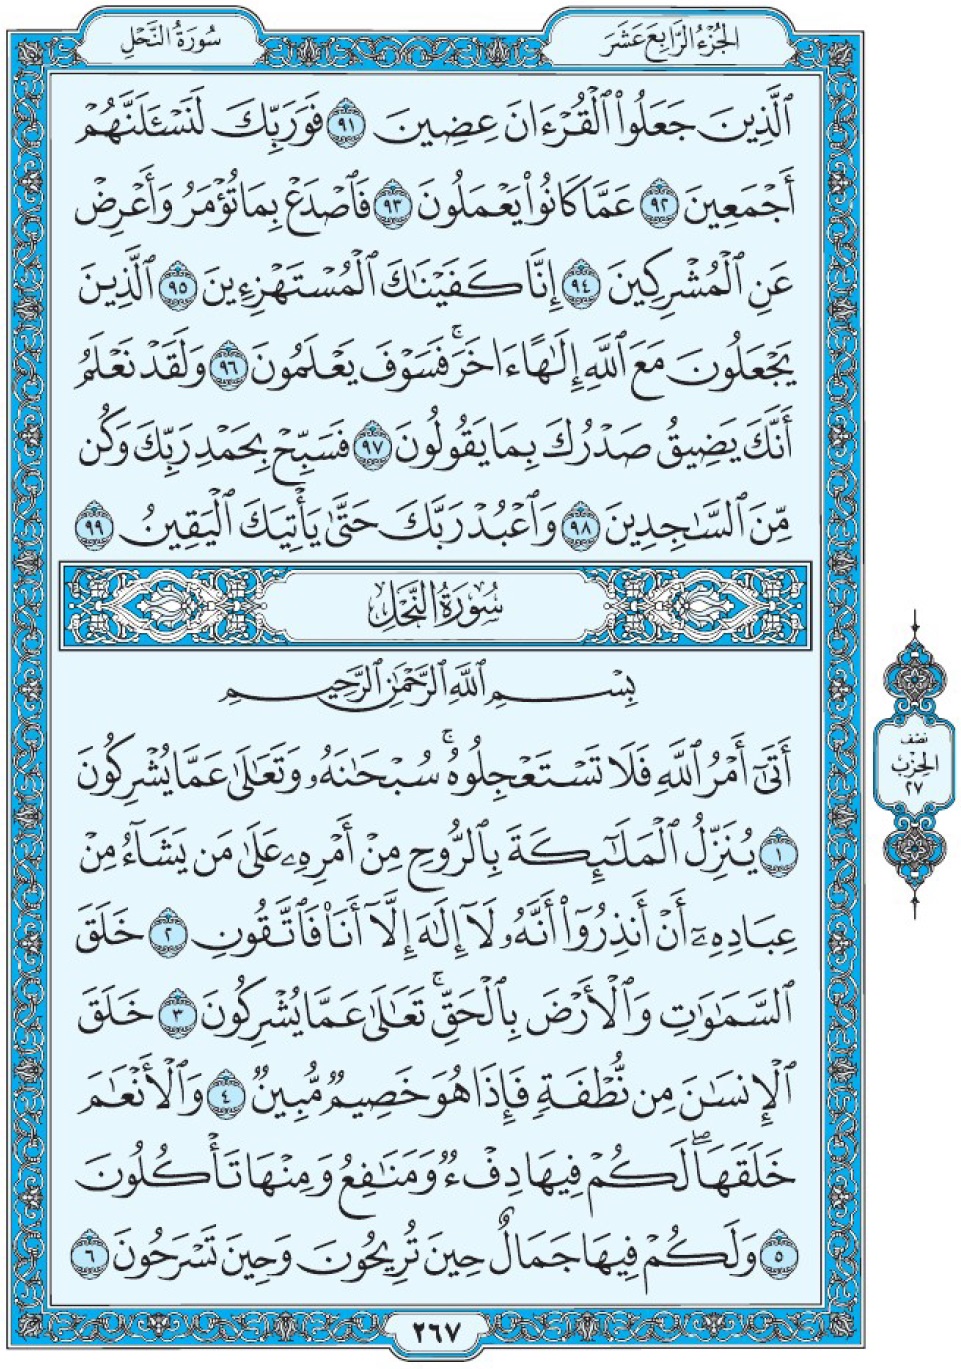 Коран Мединский мусхаф страница 267, сура 16 Ан-Нахль سورة ١٦ النحل 